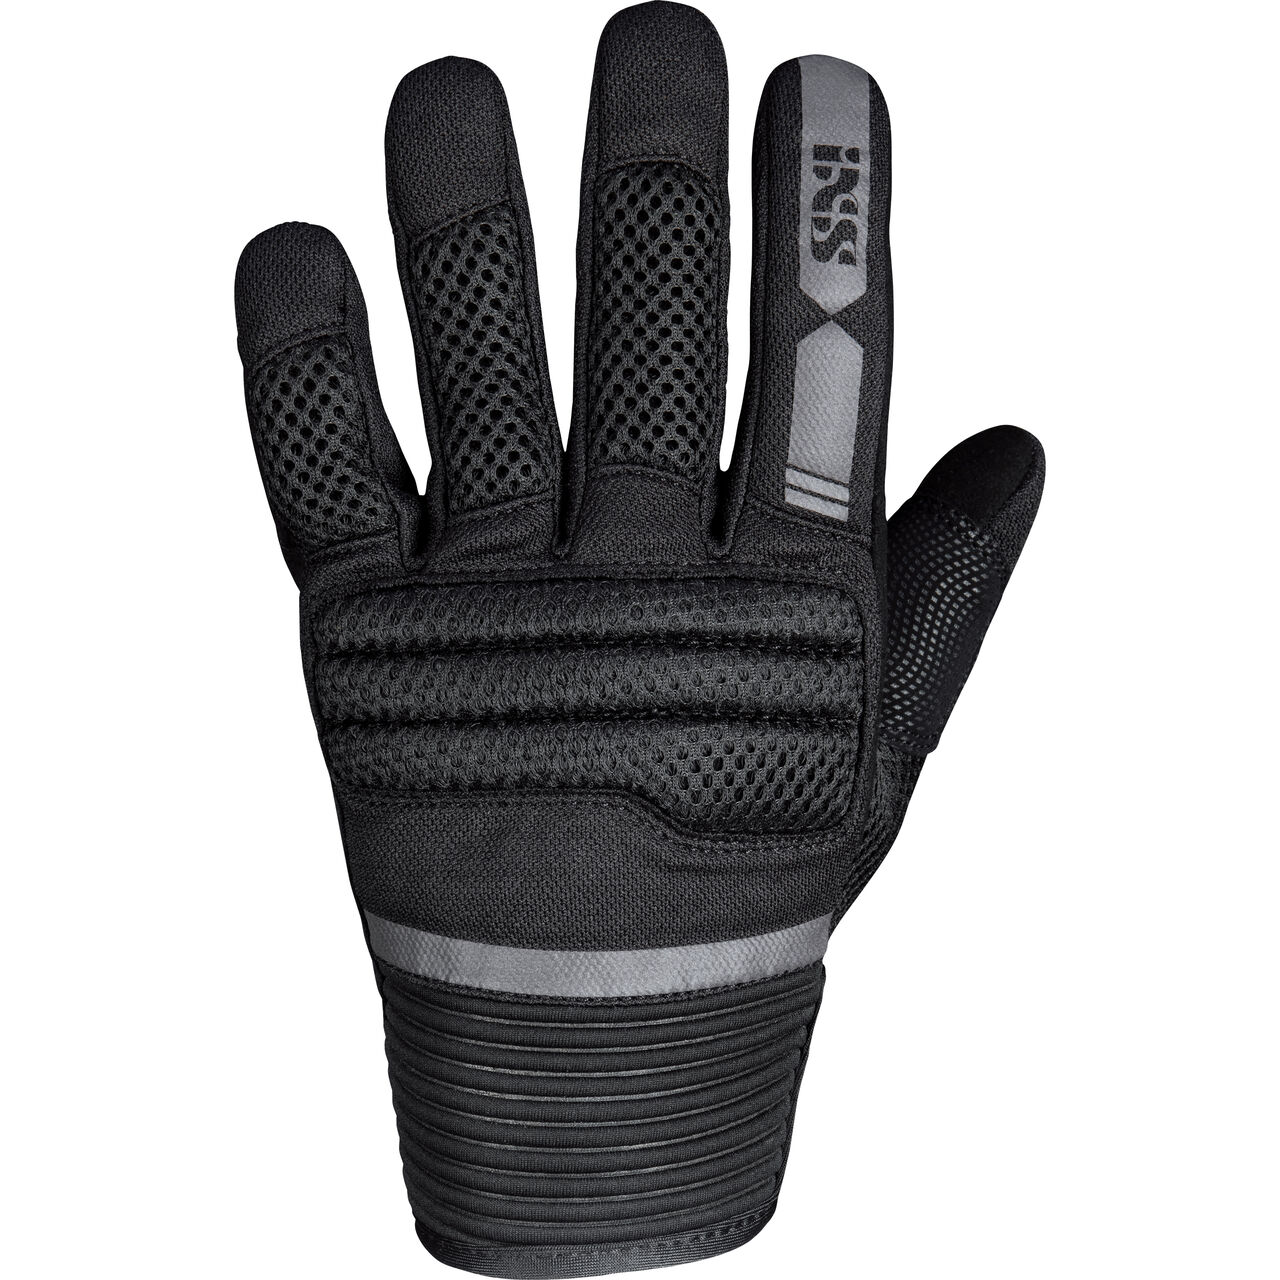 Samur-Air 2.0 Urban Glove black